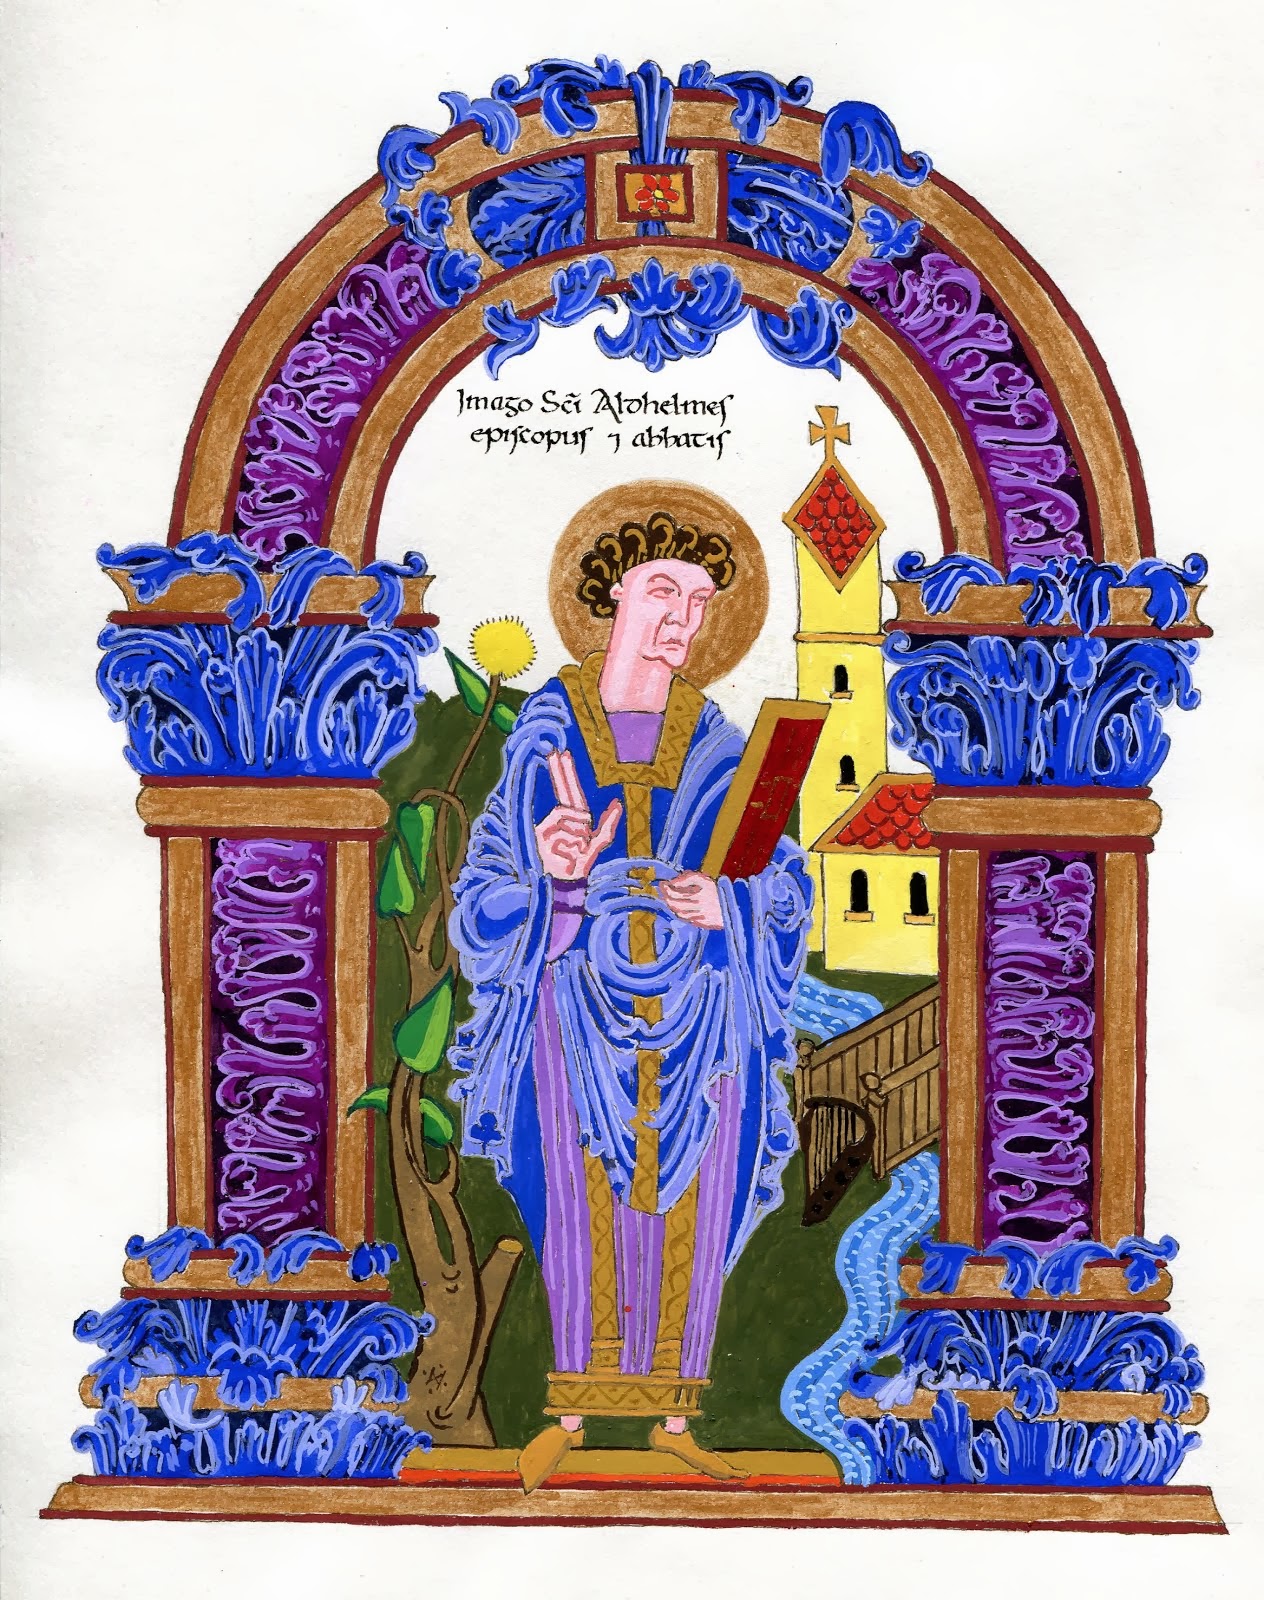 A new icon of Saint Aldhelm by Eadmund Dunstall